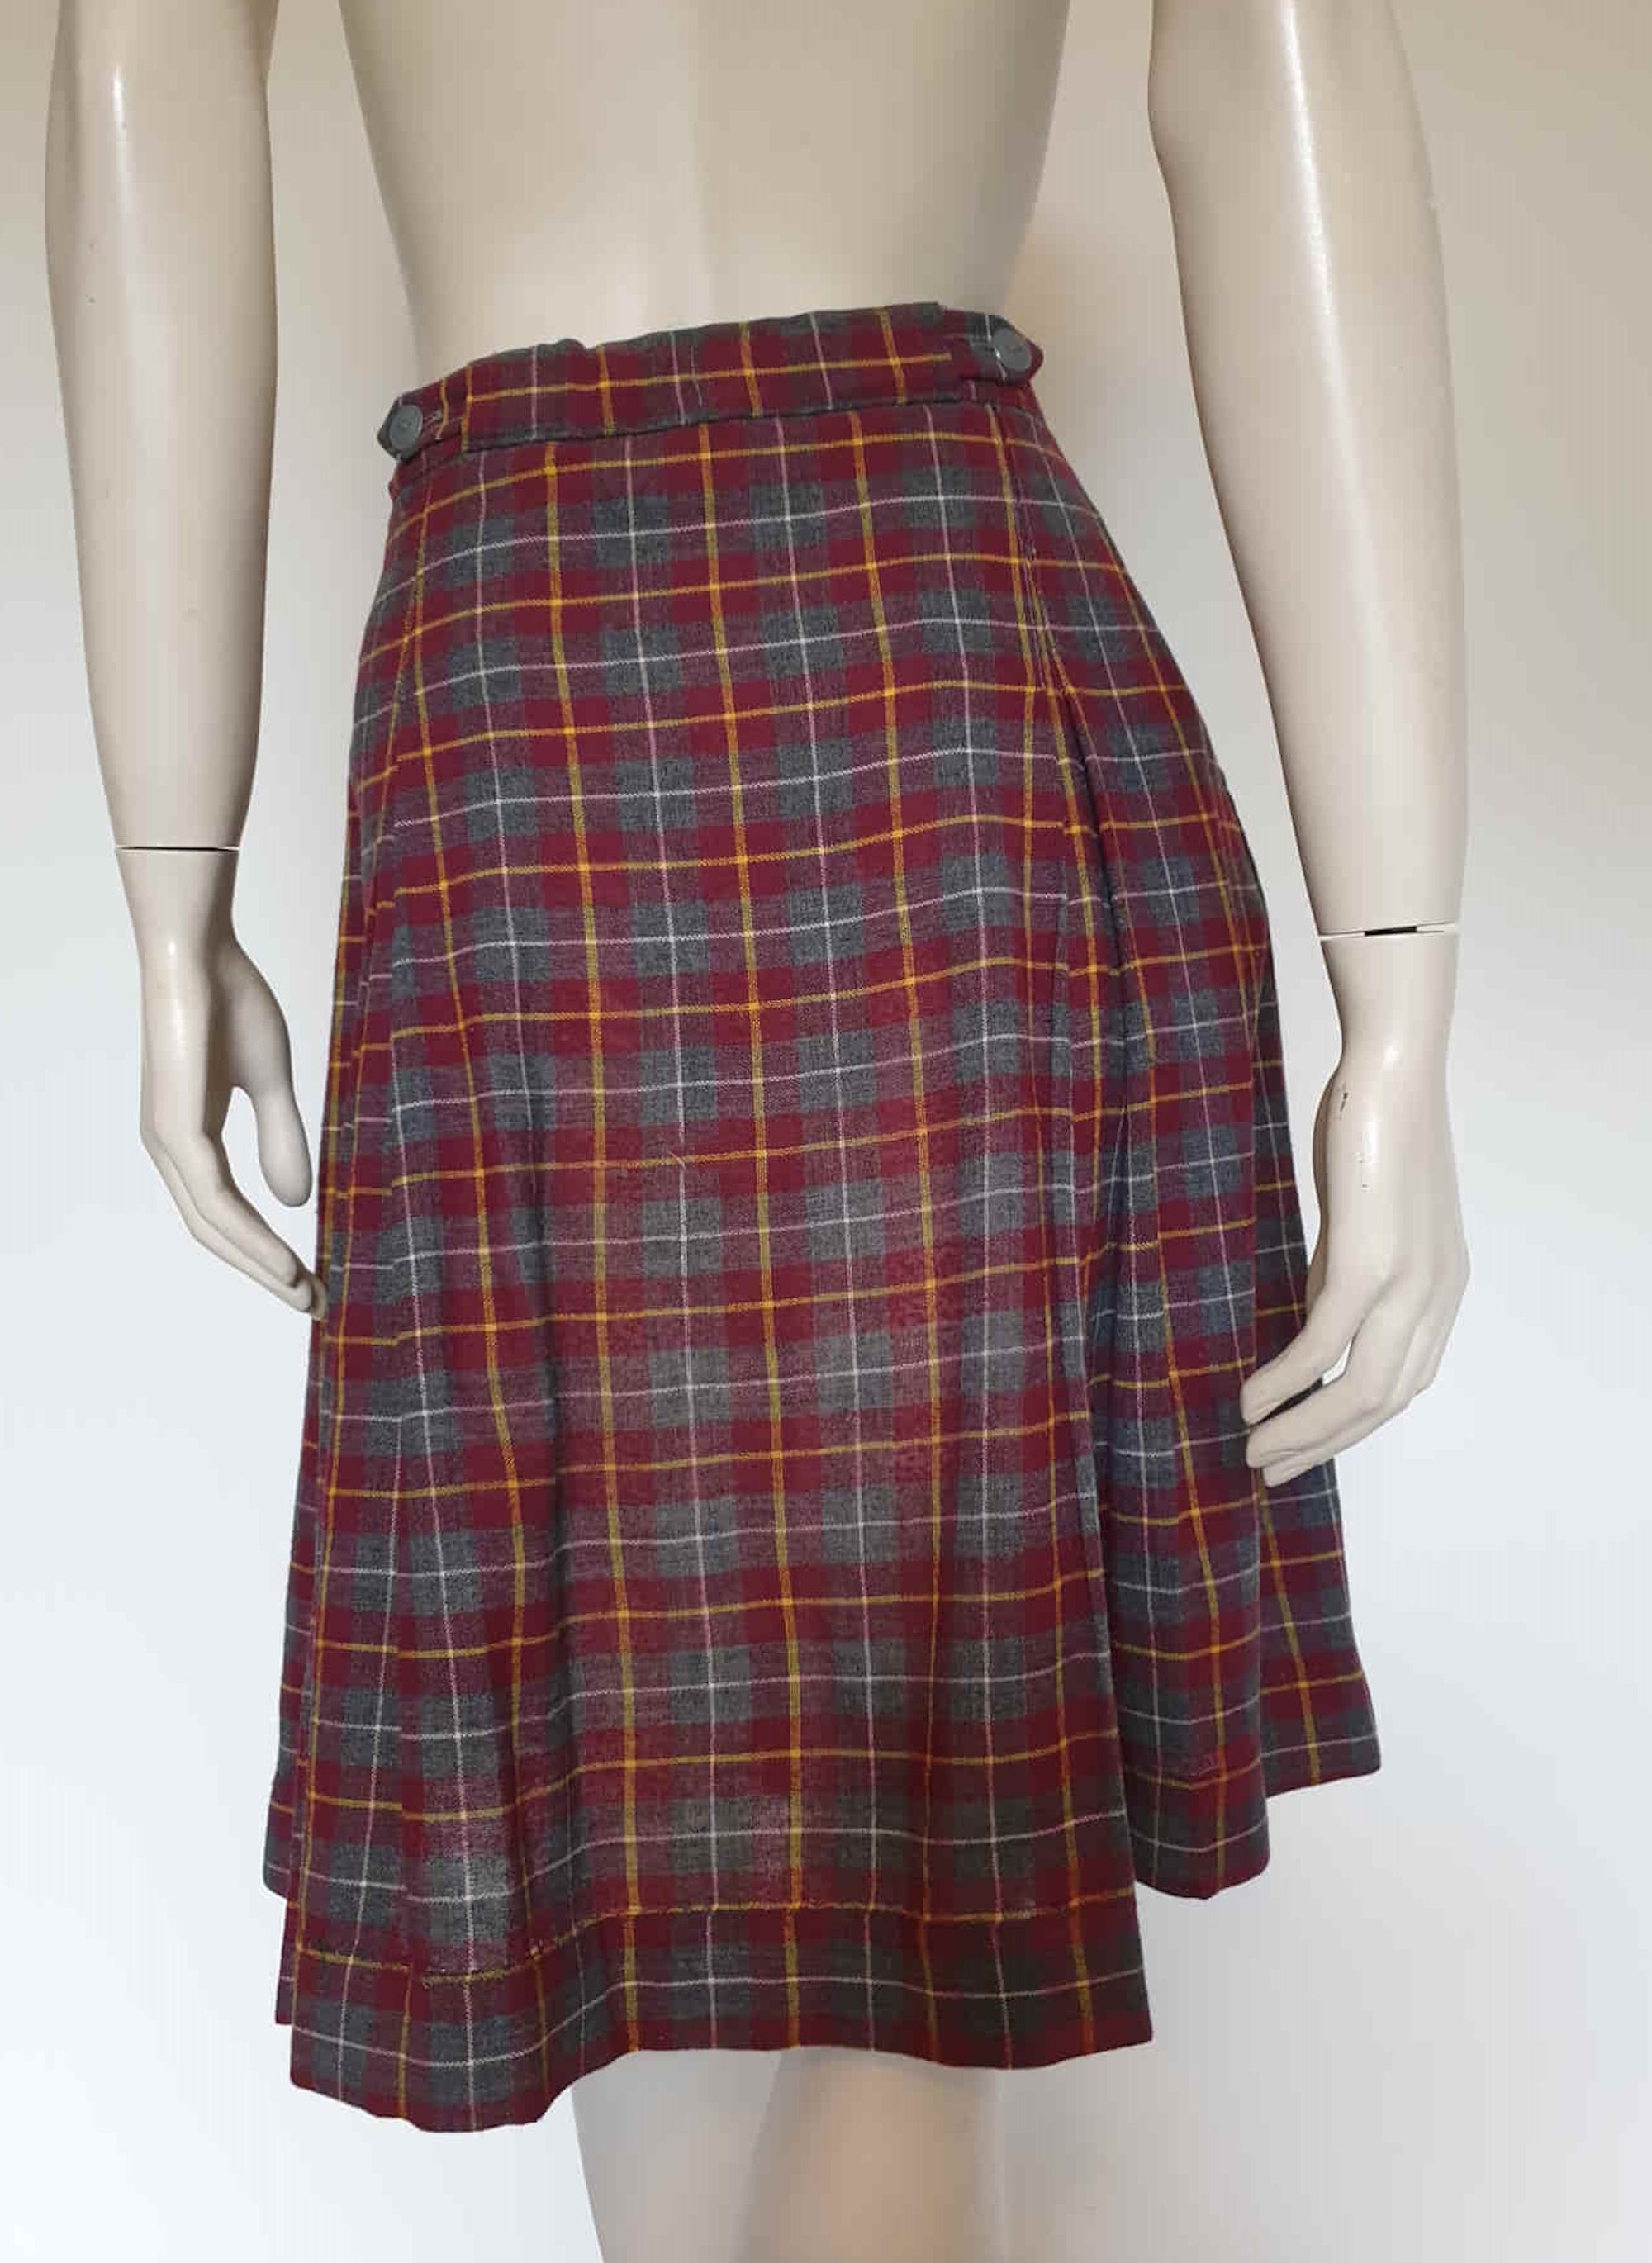 vintage 1980s maroon and grey plaid pleated school skirt by Buxwear Medium